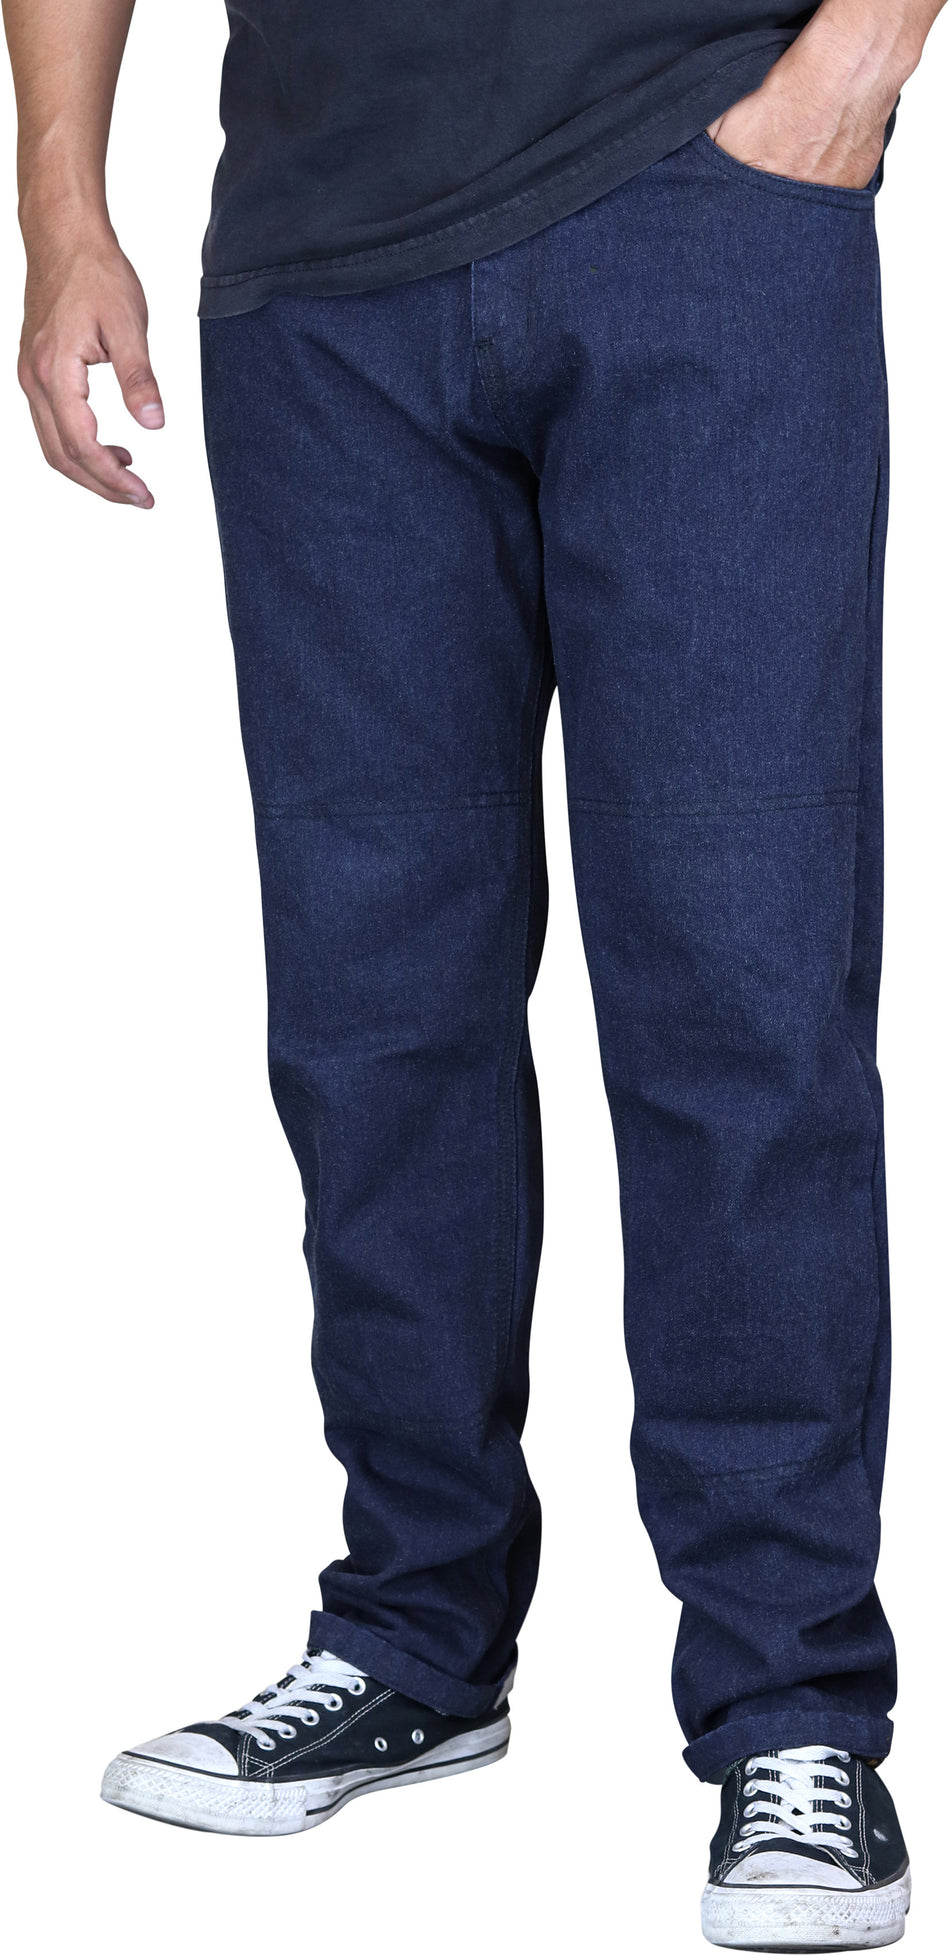 SCORPION EXO Covert Ultra Jeans Blue Size 32 4402-32